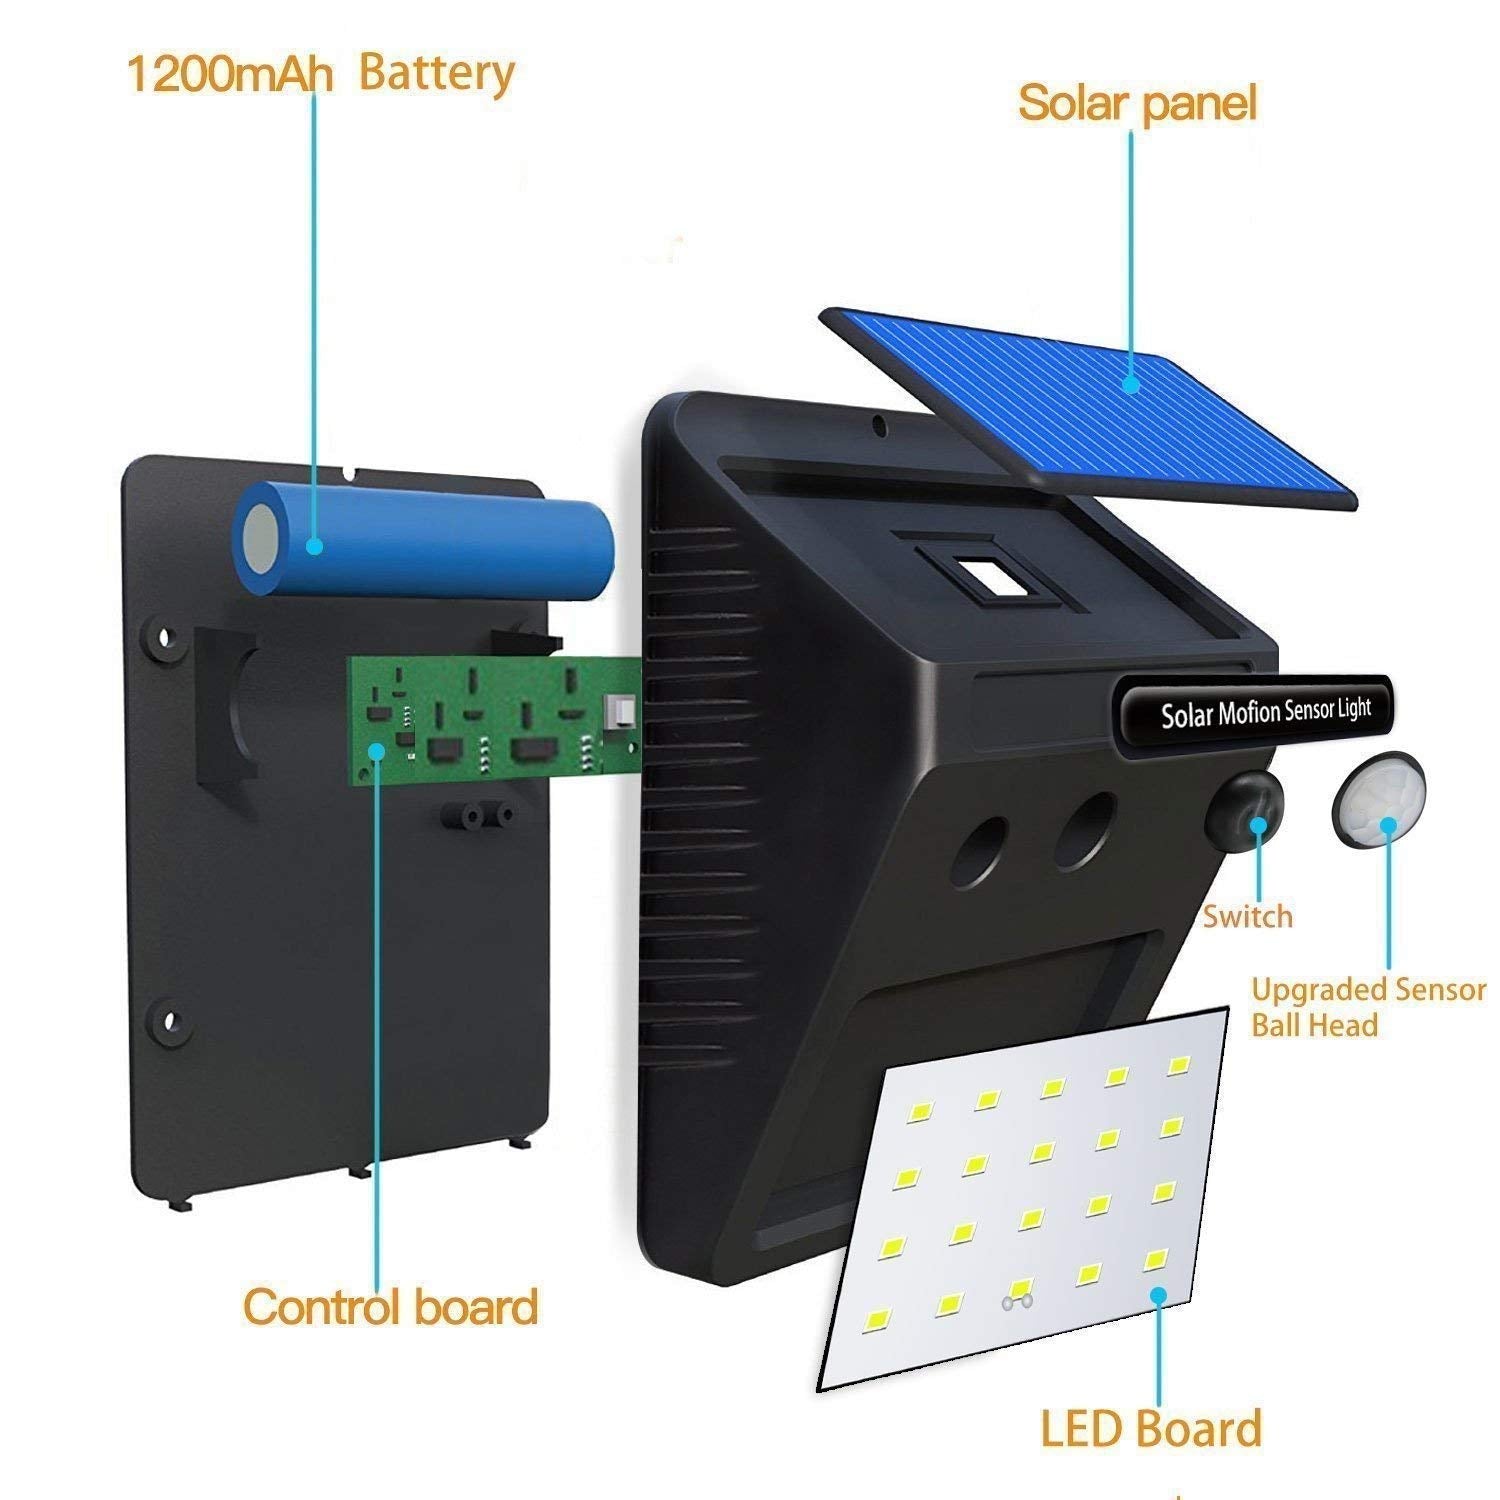 6608 White Solar Wireless Security Motion Sensor LED Night Light for Home Outdoor/Garden Wall. DeoDap